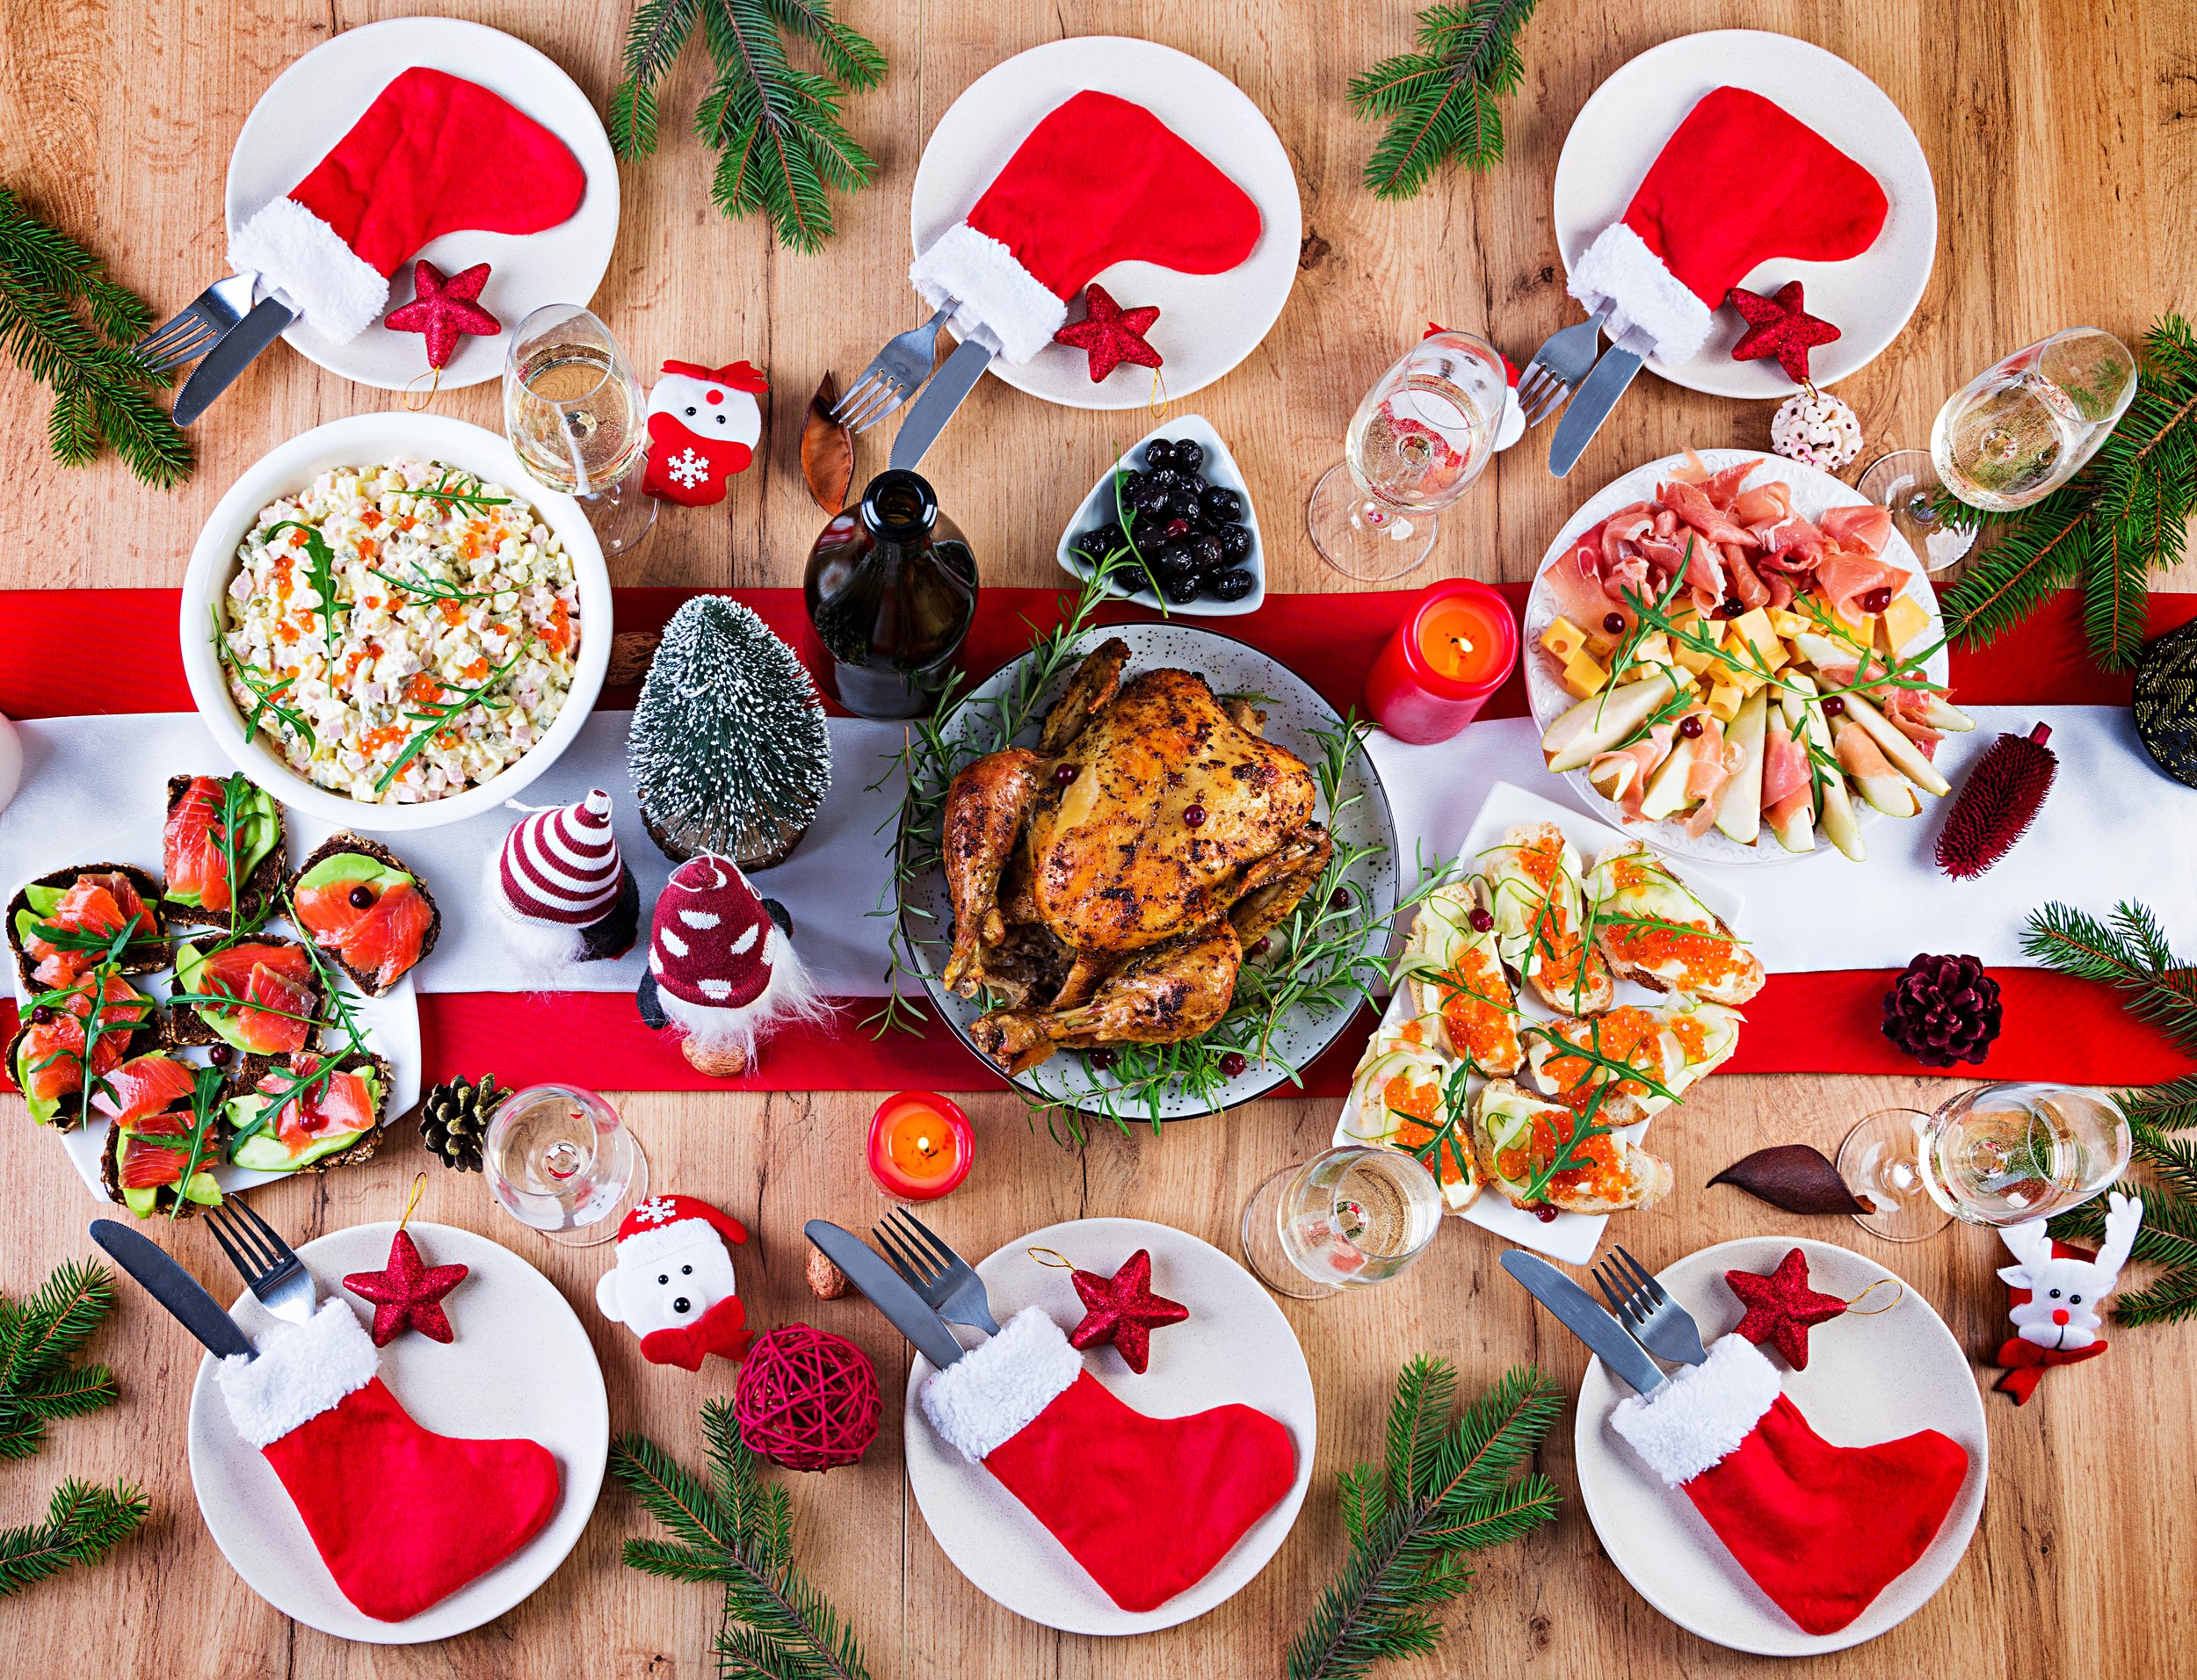 pavo-al-horno-cena-navidad-mesa-navidena-sirve-pavo-decorado-oropeles-brillantes-velas-pollo-frito-mesa-cena-familiar-vista-superior-plano-arriba-espacio-copia.jpg